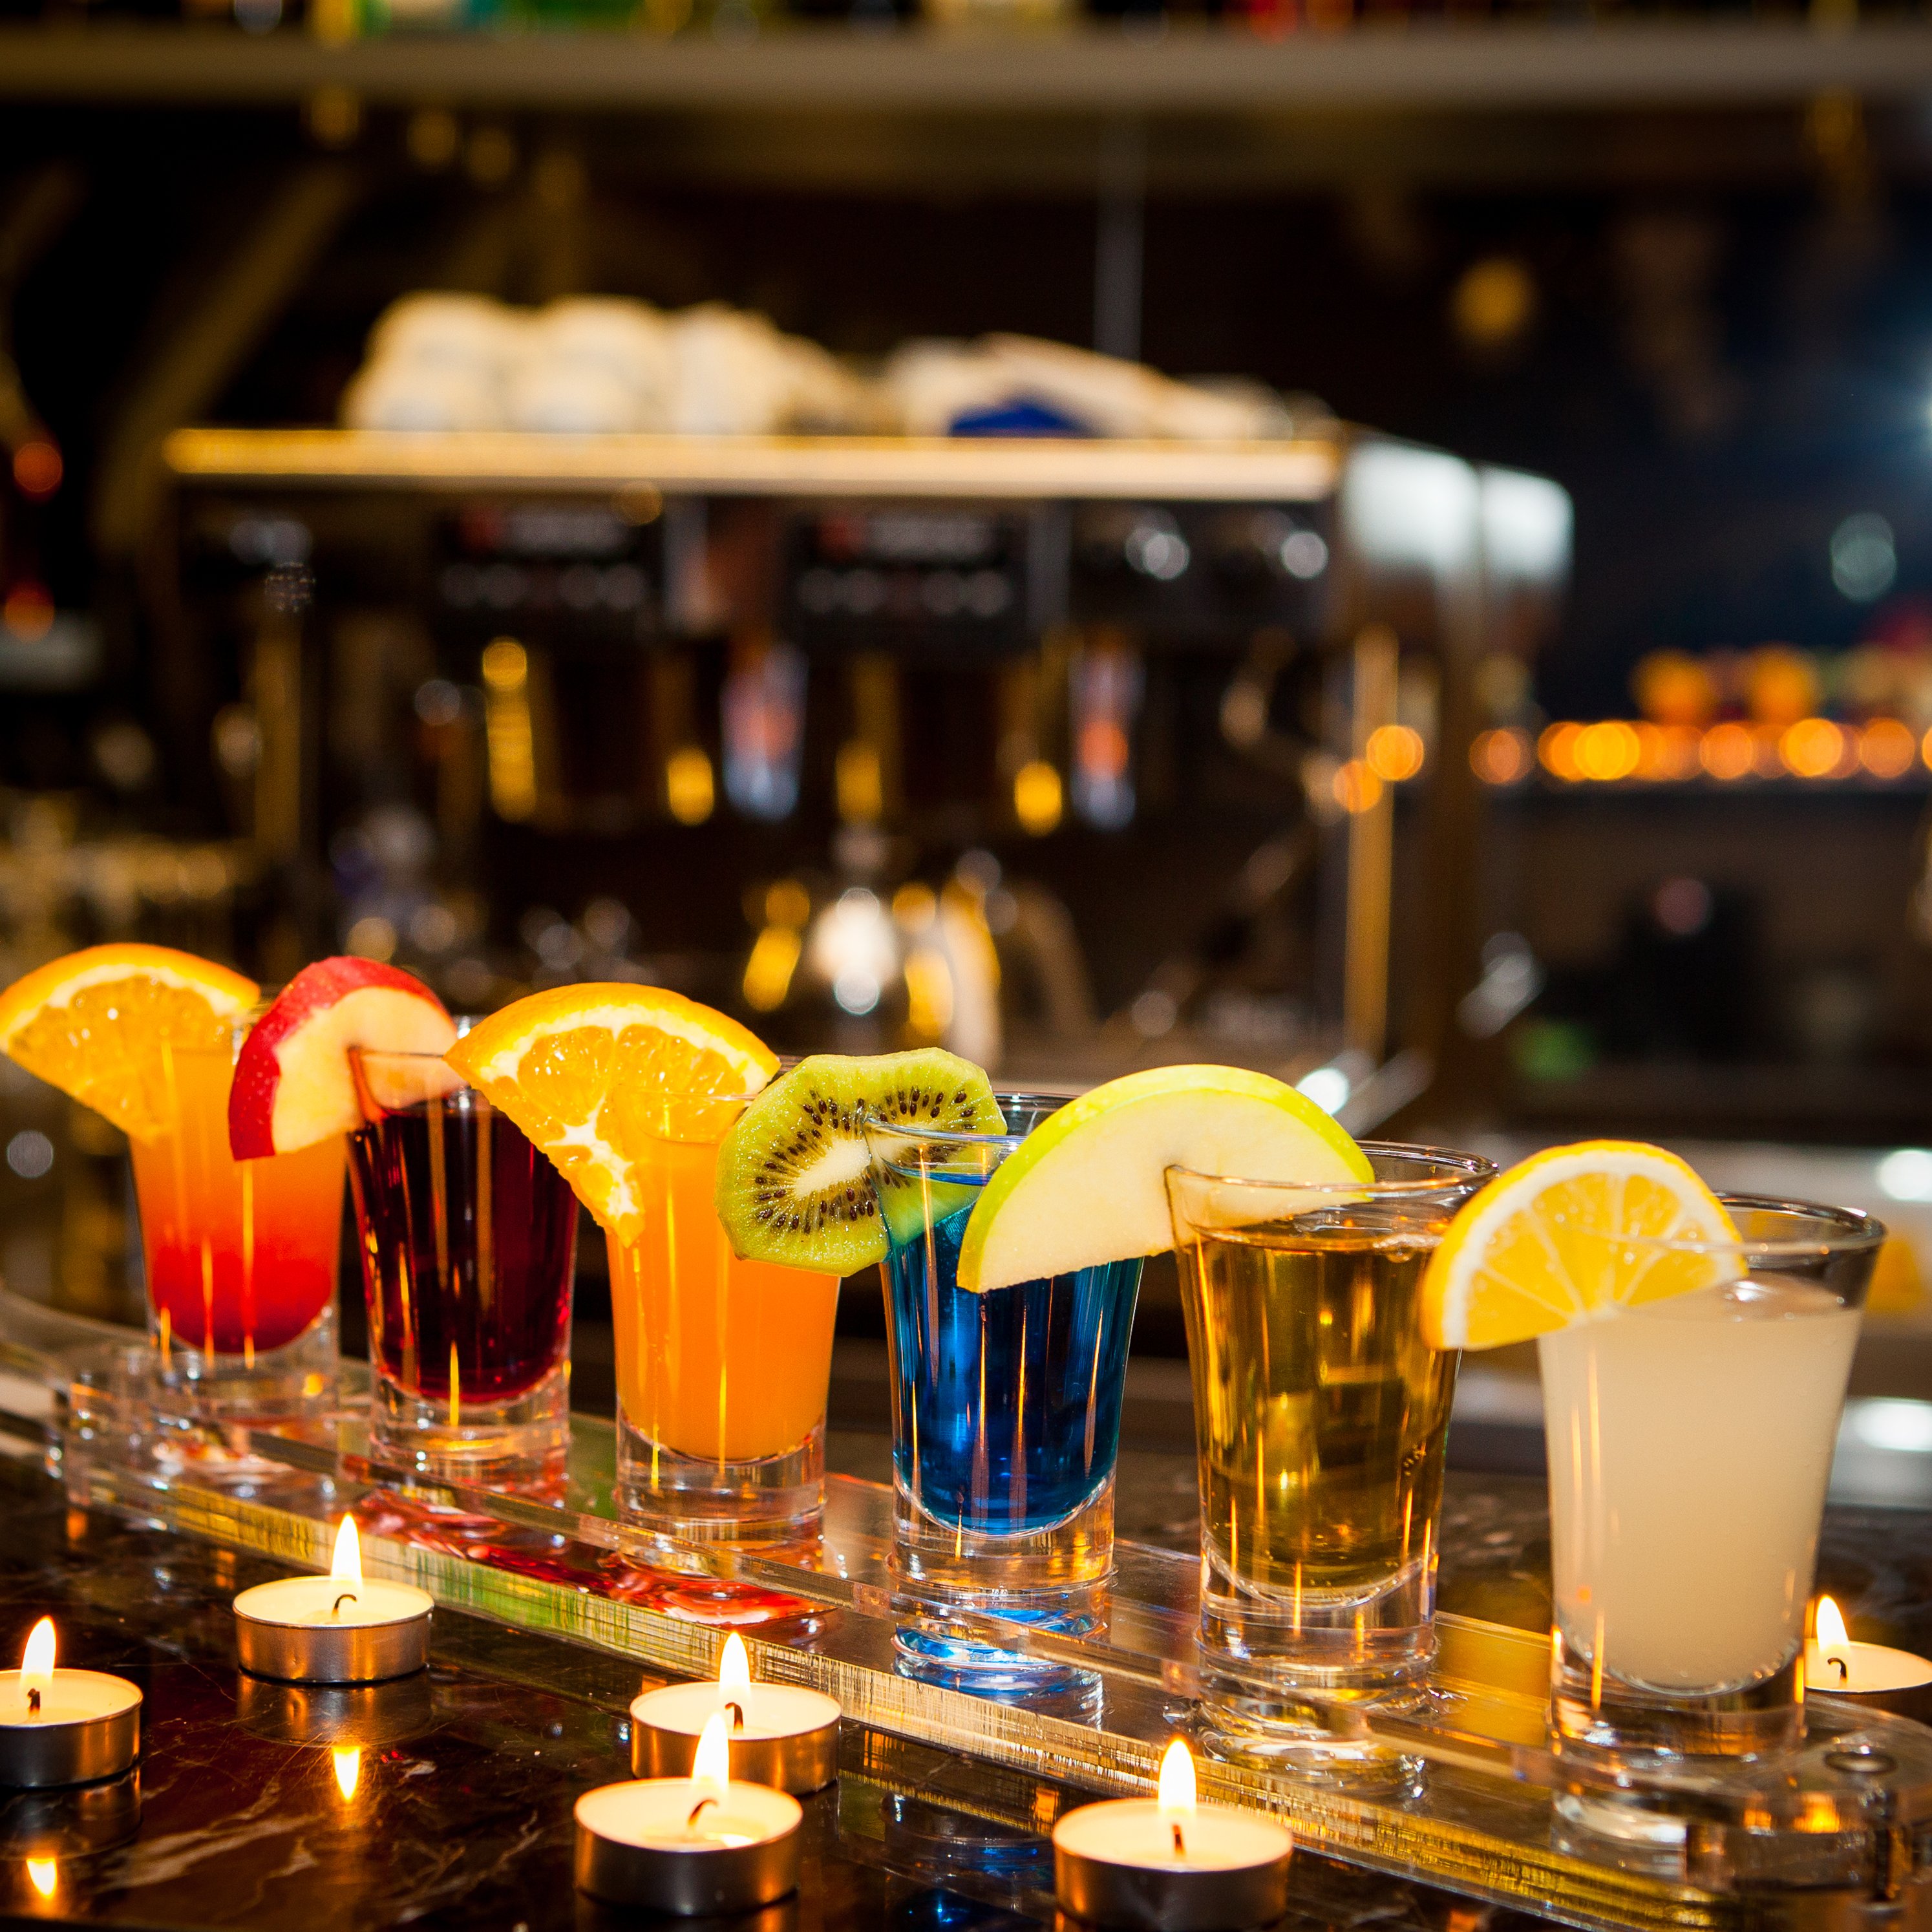 side-view-cocktail-shots-with-slice-lemon-kiwi-slice-candles-bar